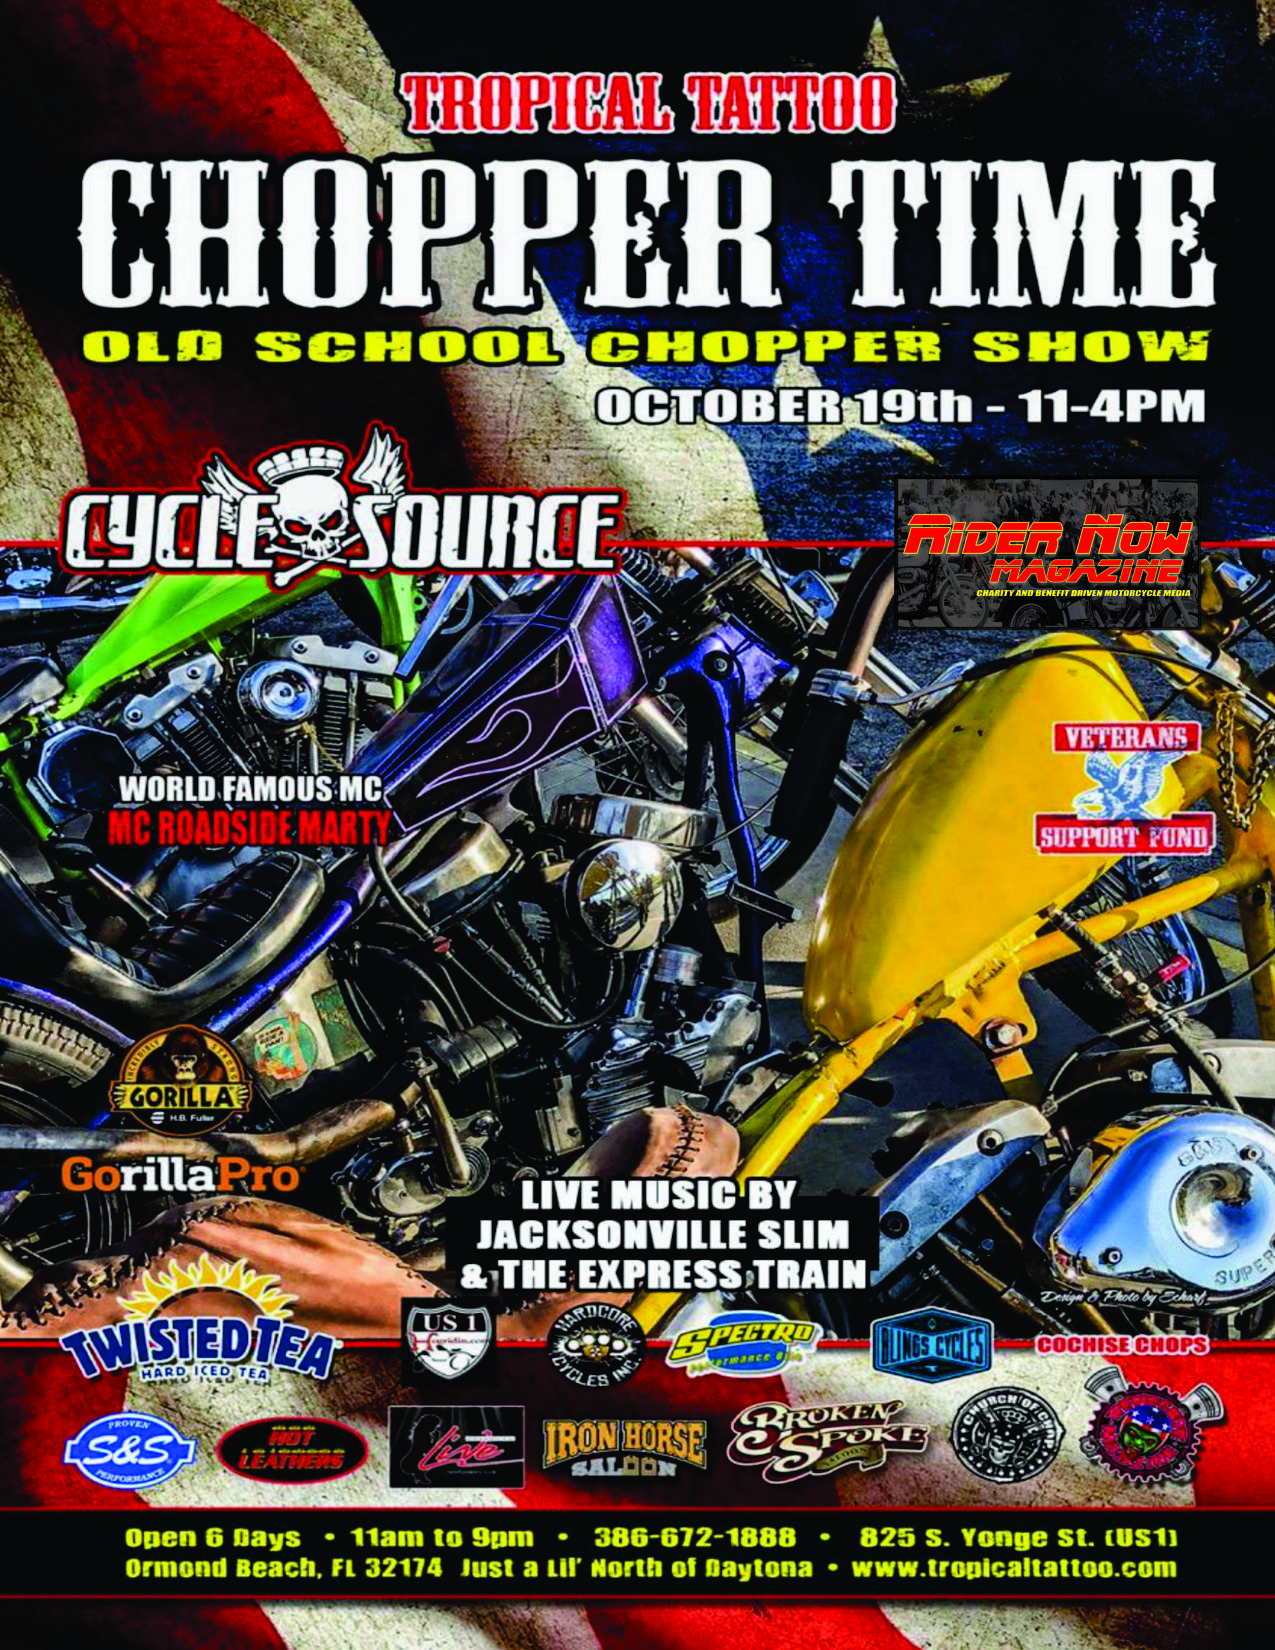 Chopper Time pg 12